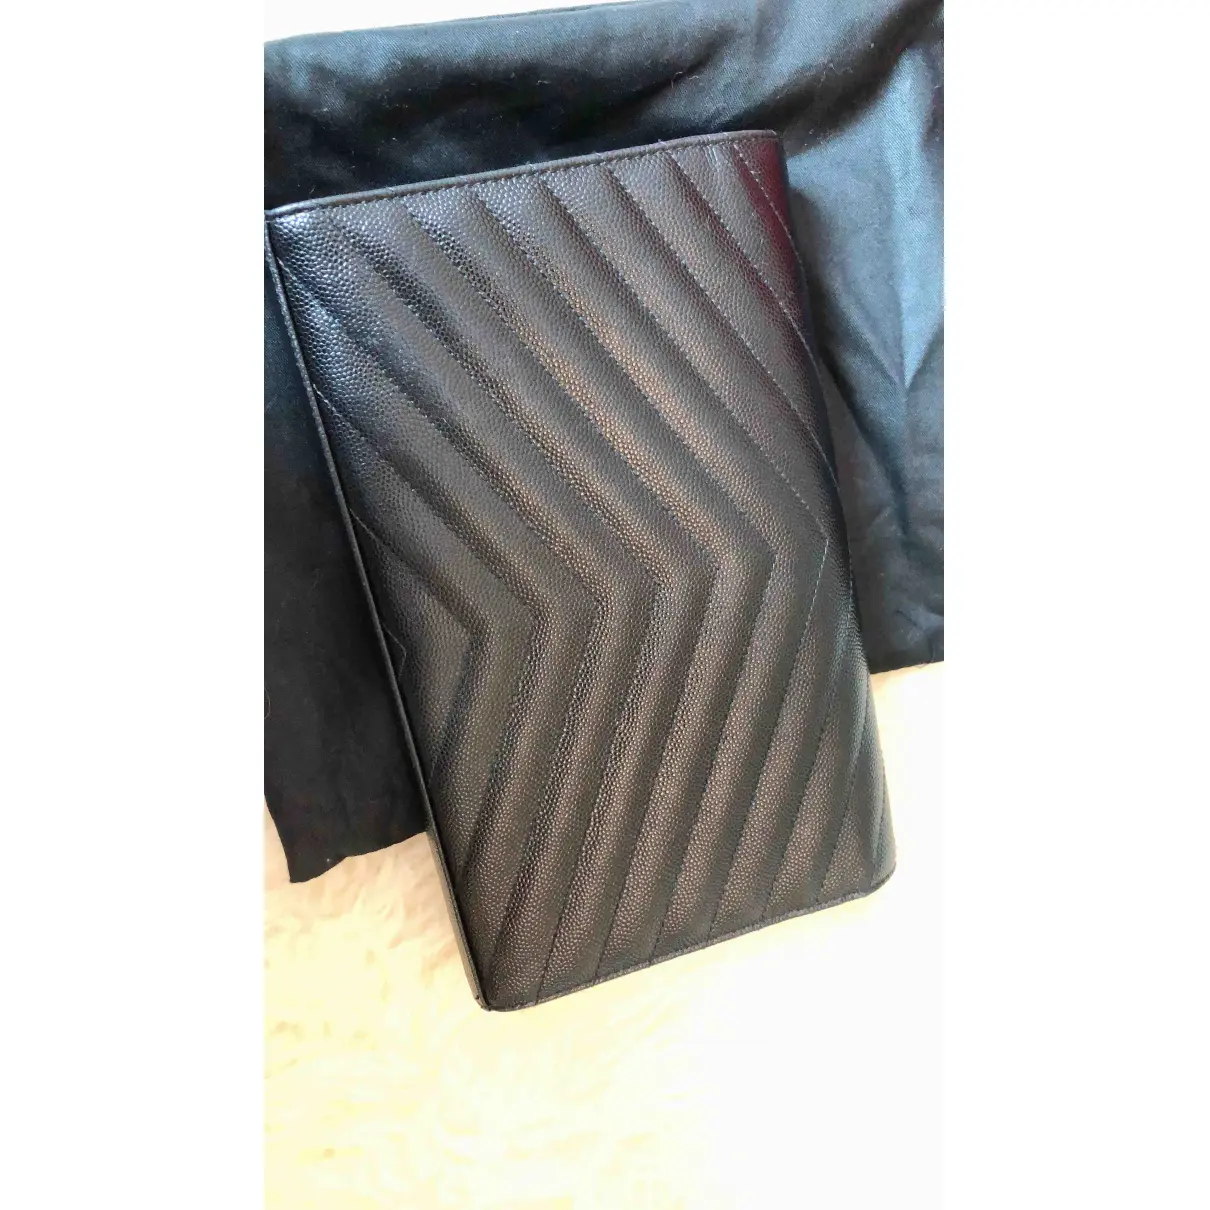 Buy Saint Laurent Portefeuille enveloppe leather clutch bag online